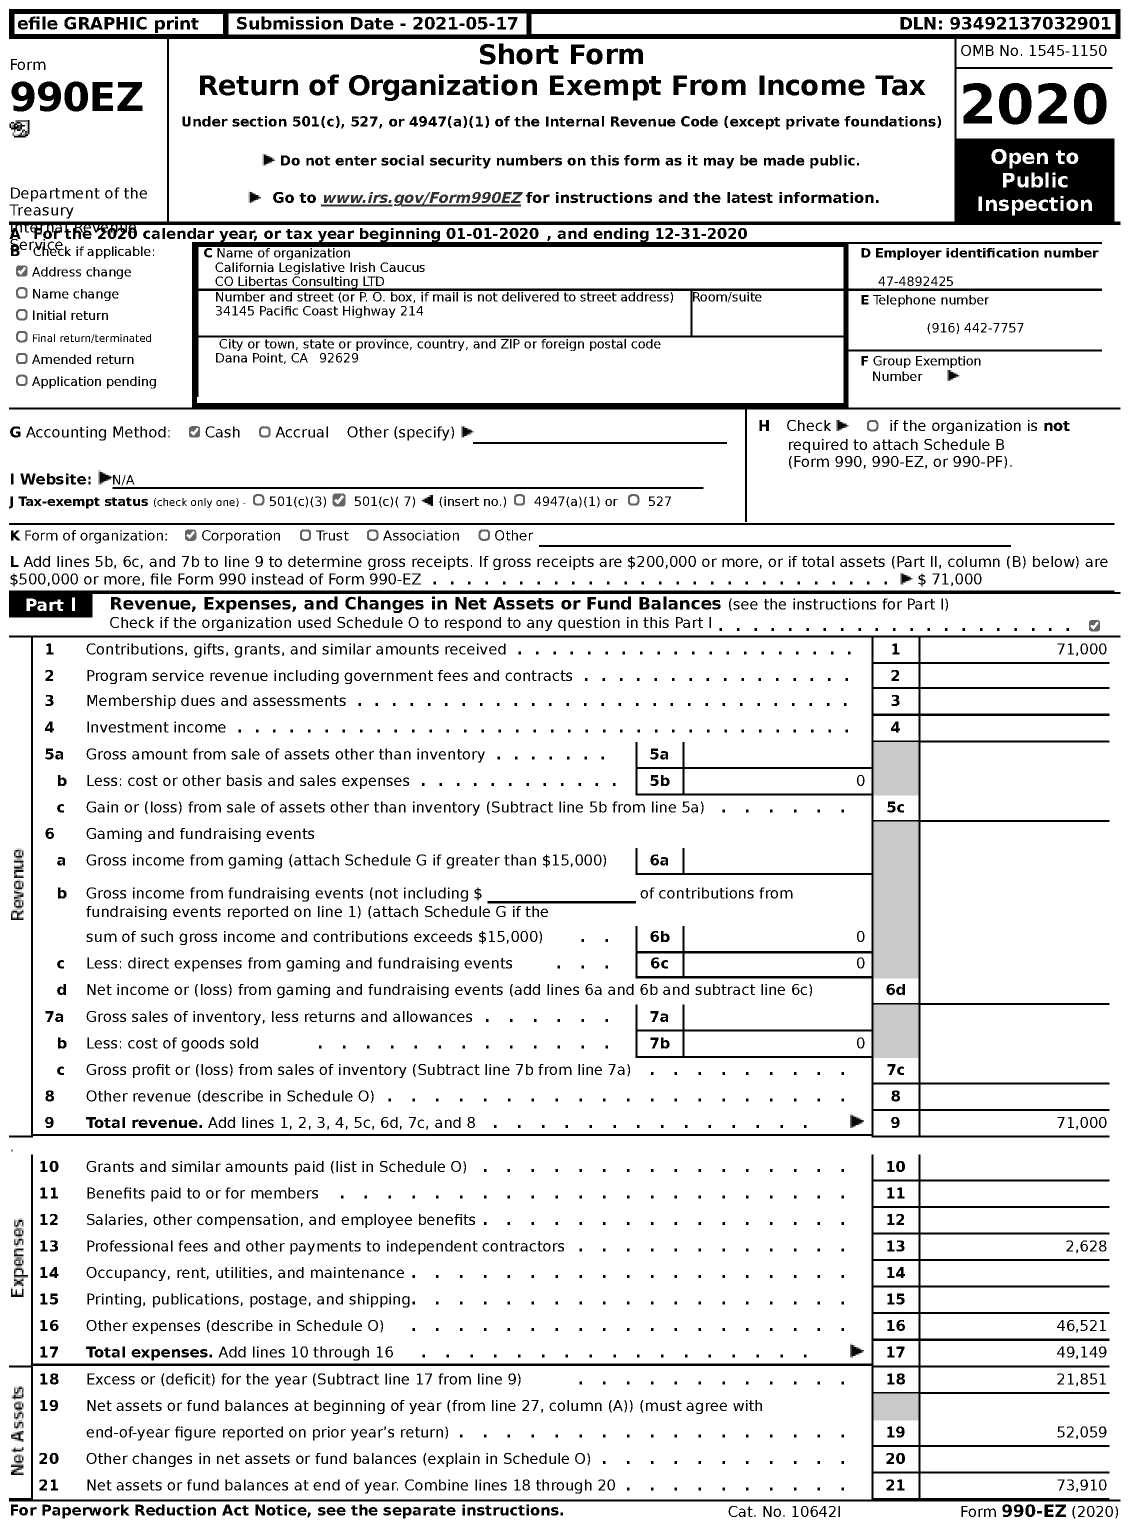 Image of first page of 2020 Form 990EZ for California Legislative Irish Caucus